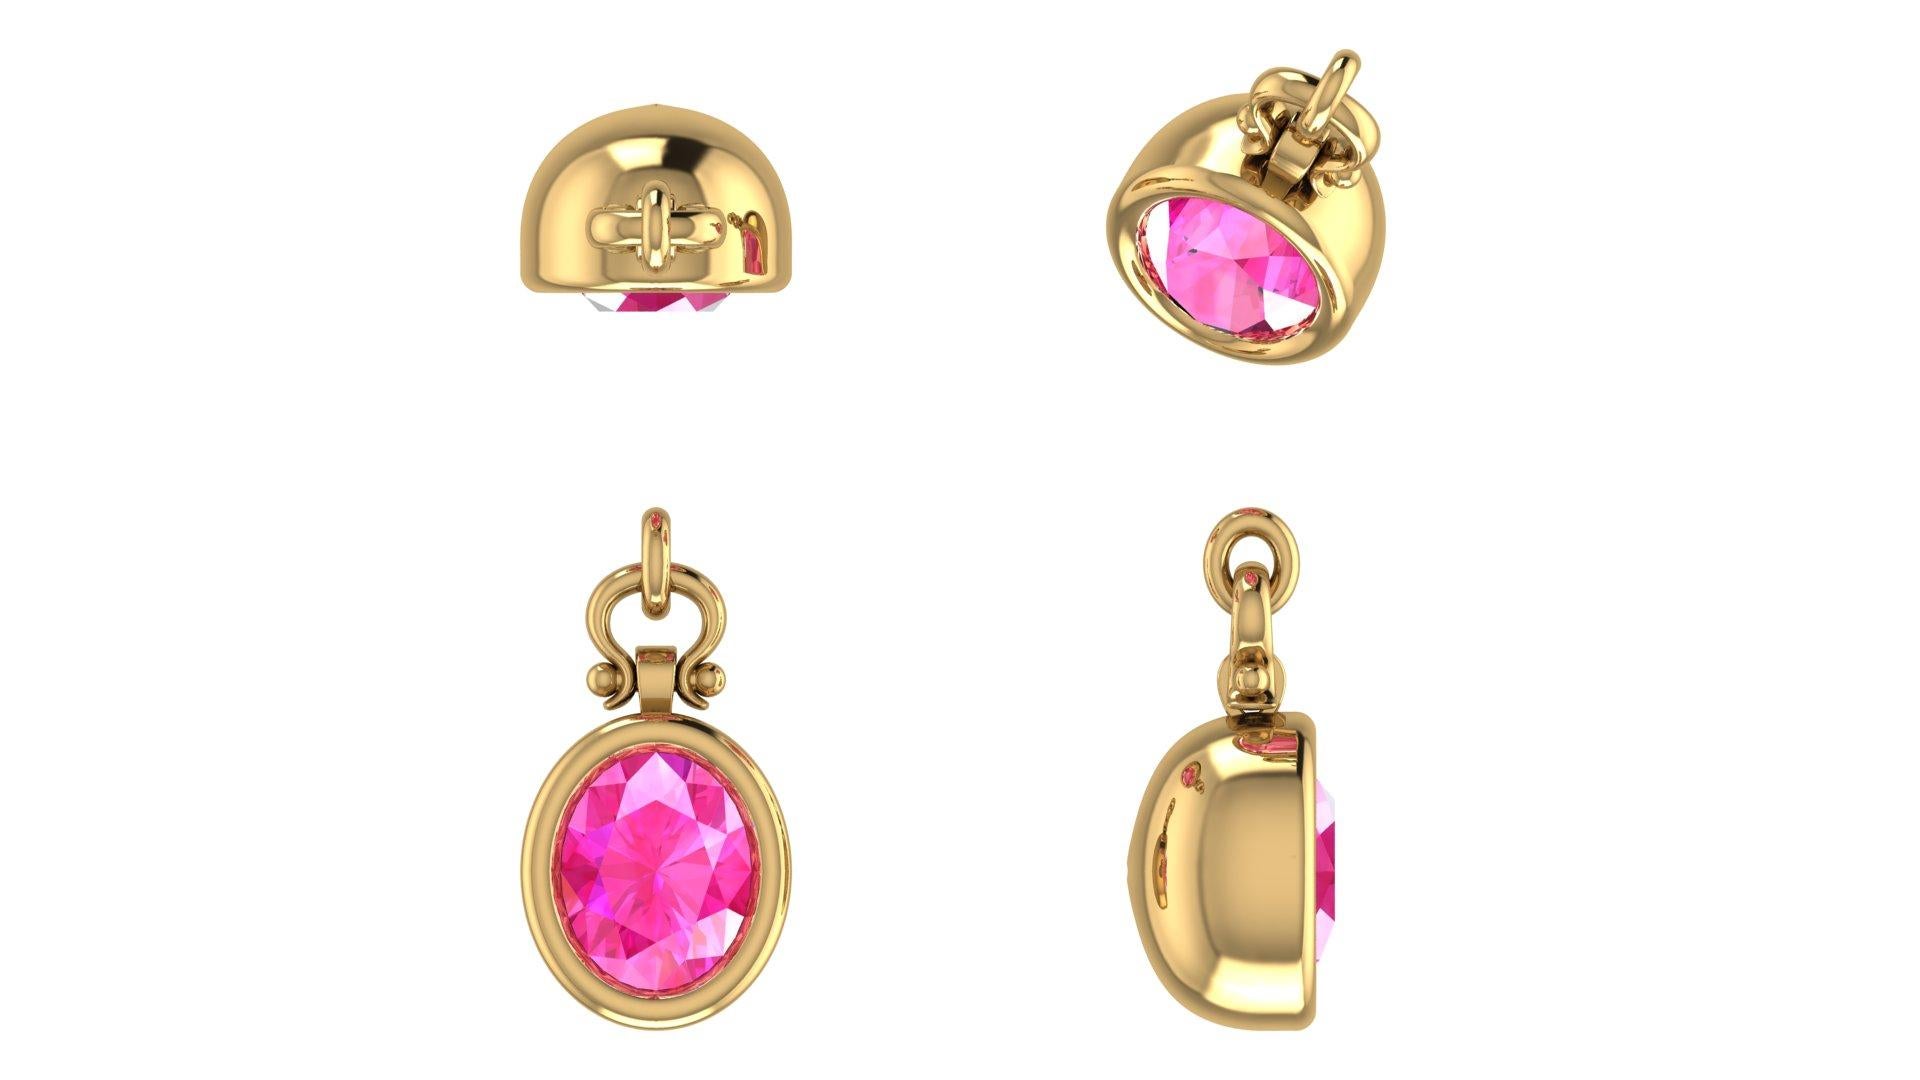 Berberyn Certified 3.74 Carat Oval Pink Sapphire Pendant Necklace in 18k For Sale 1